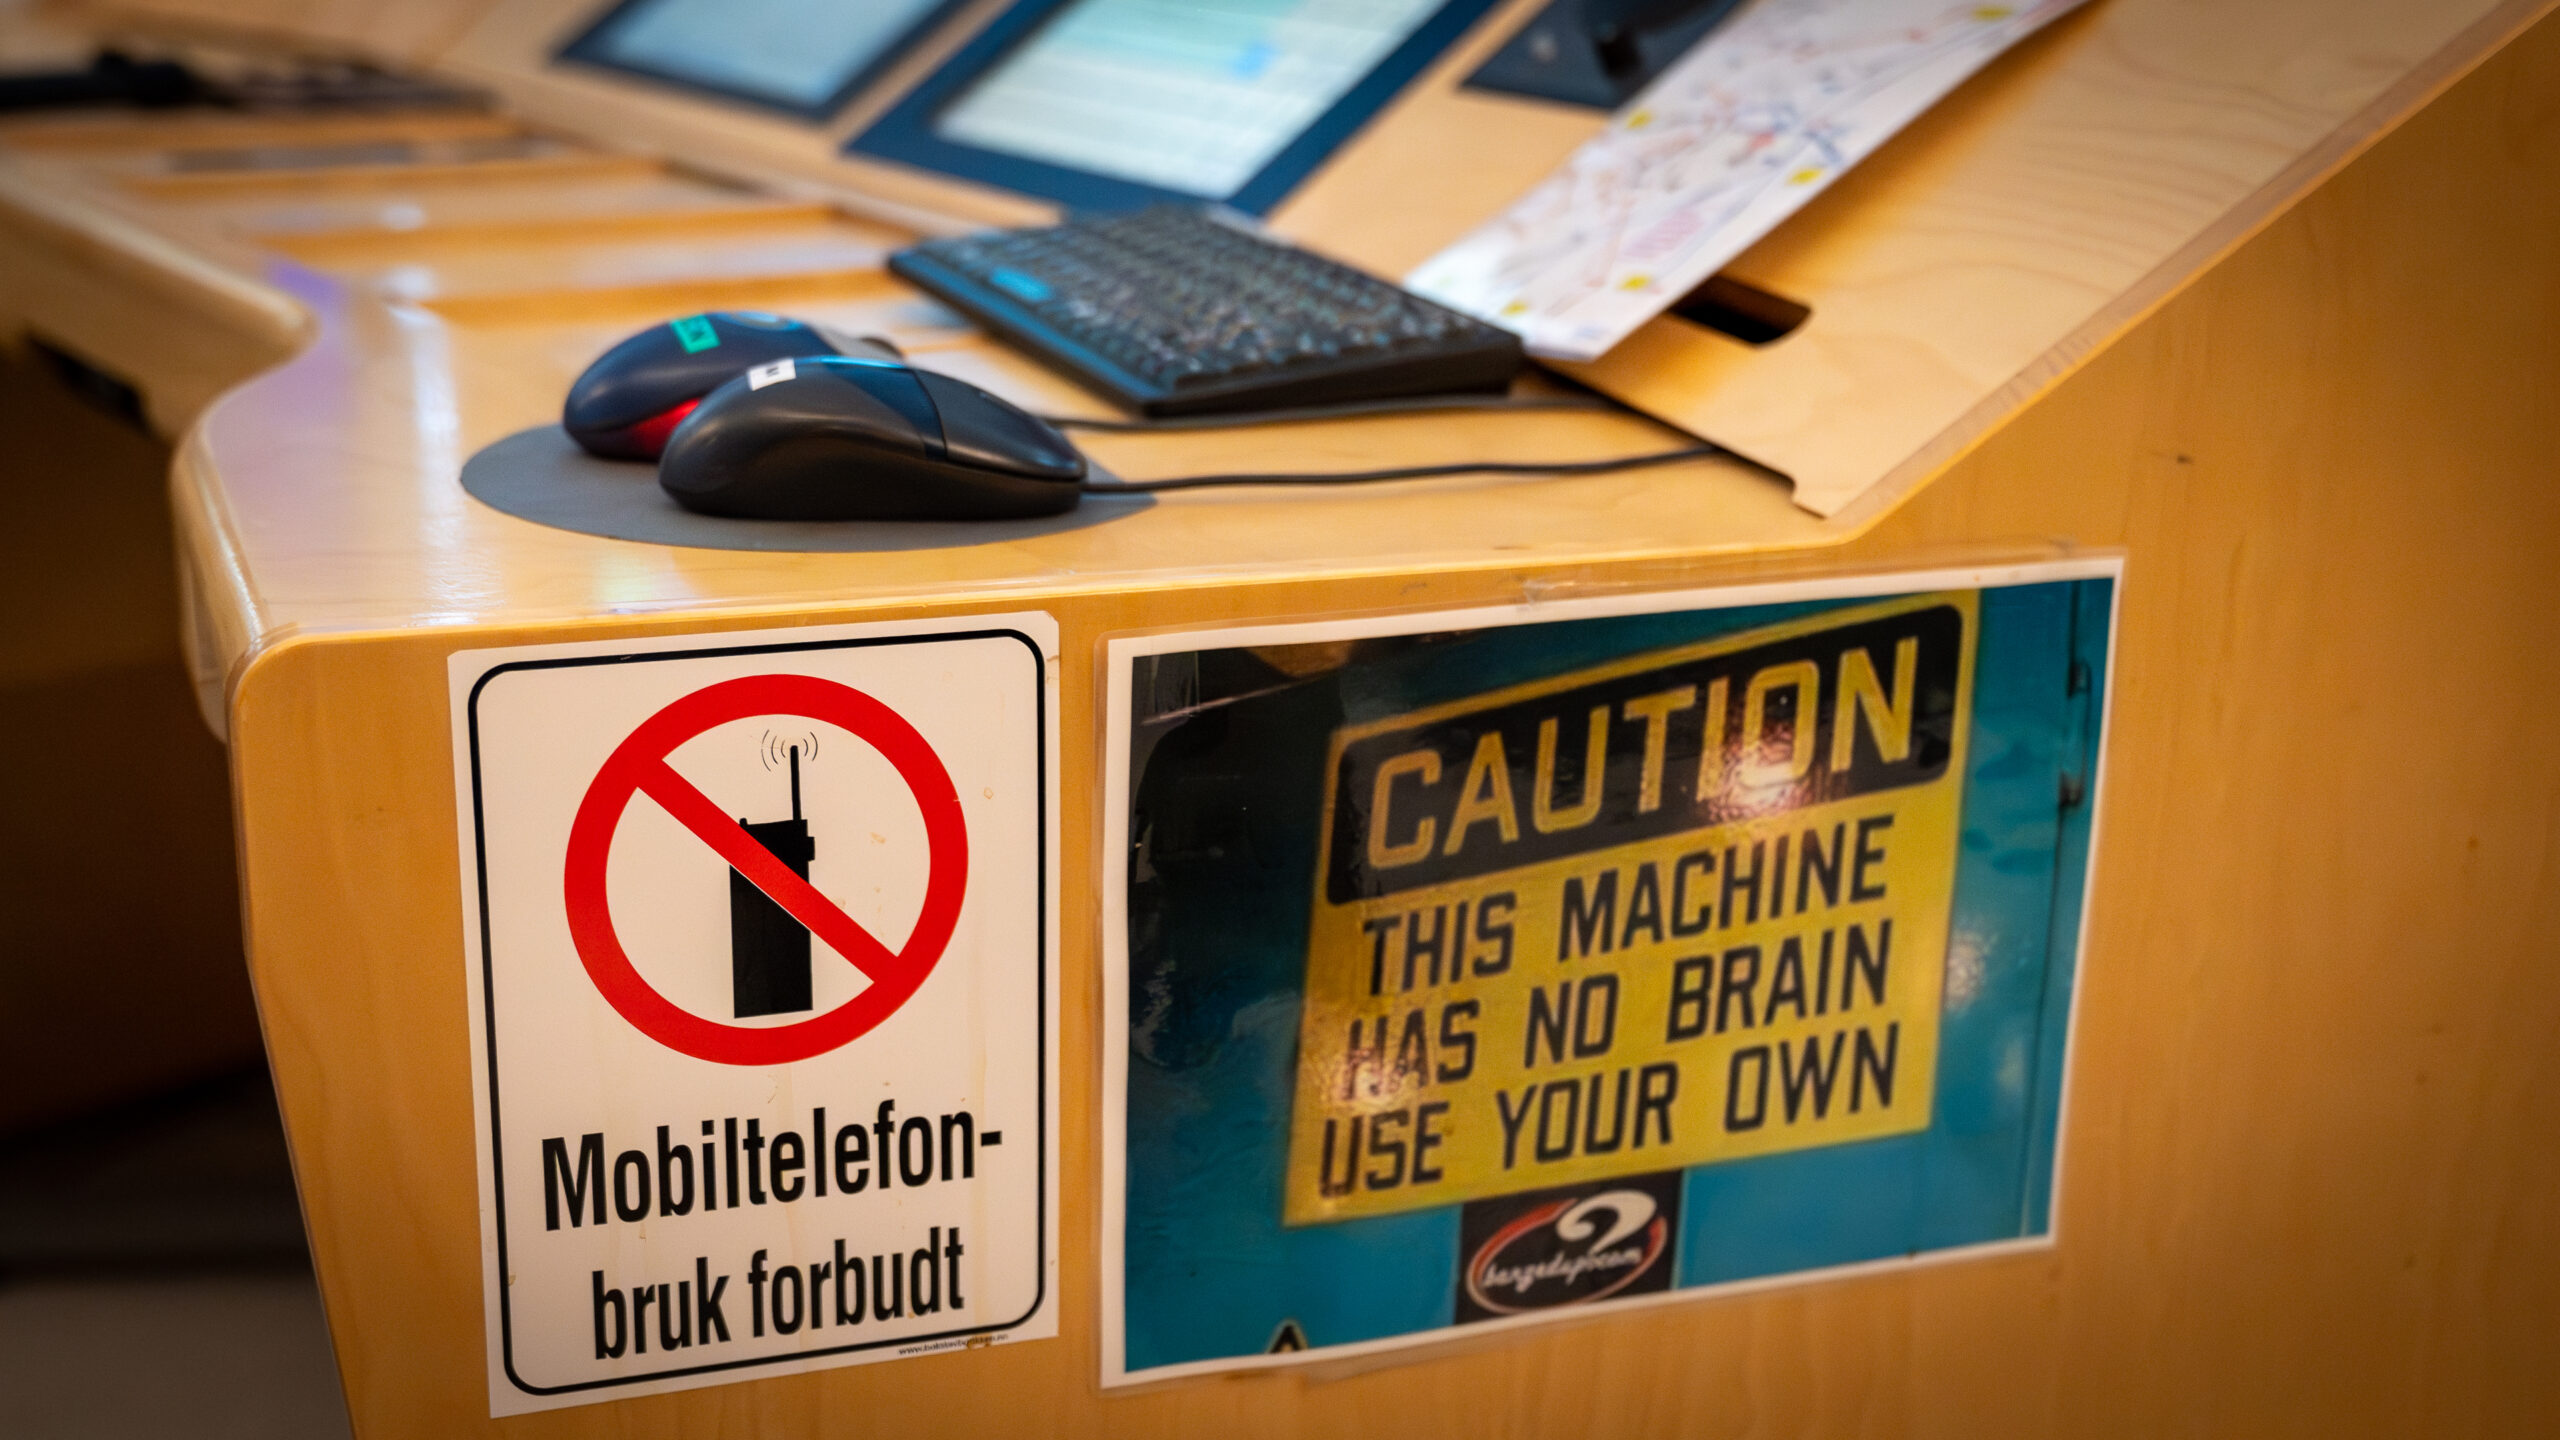 To skilt henger på en pult, på det ene står det: "mobiltelefonbruk forbudt", på det andre står det: "caution, this machine has no brain, use your own"